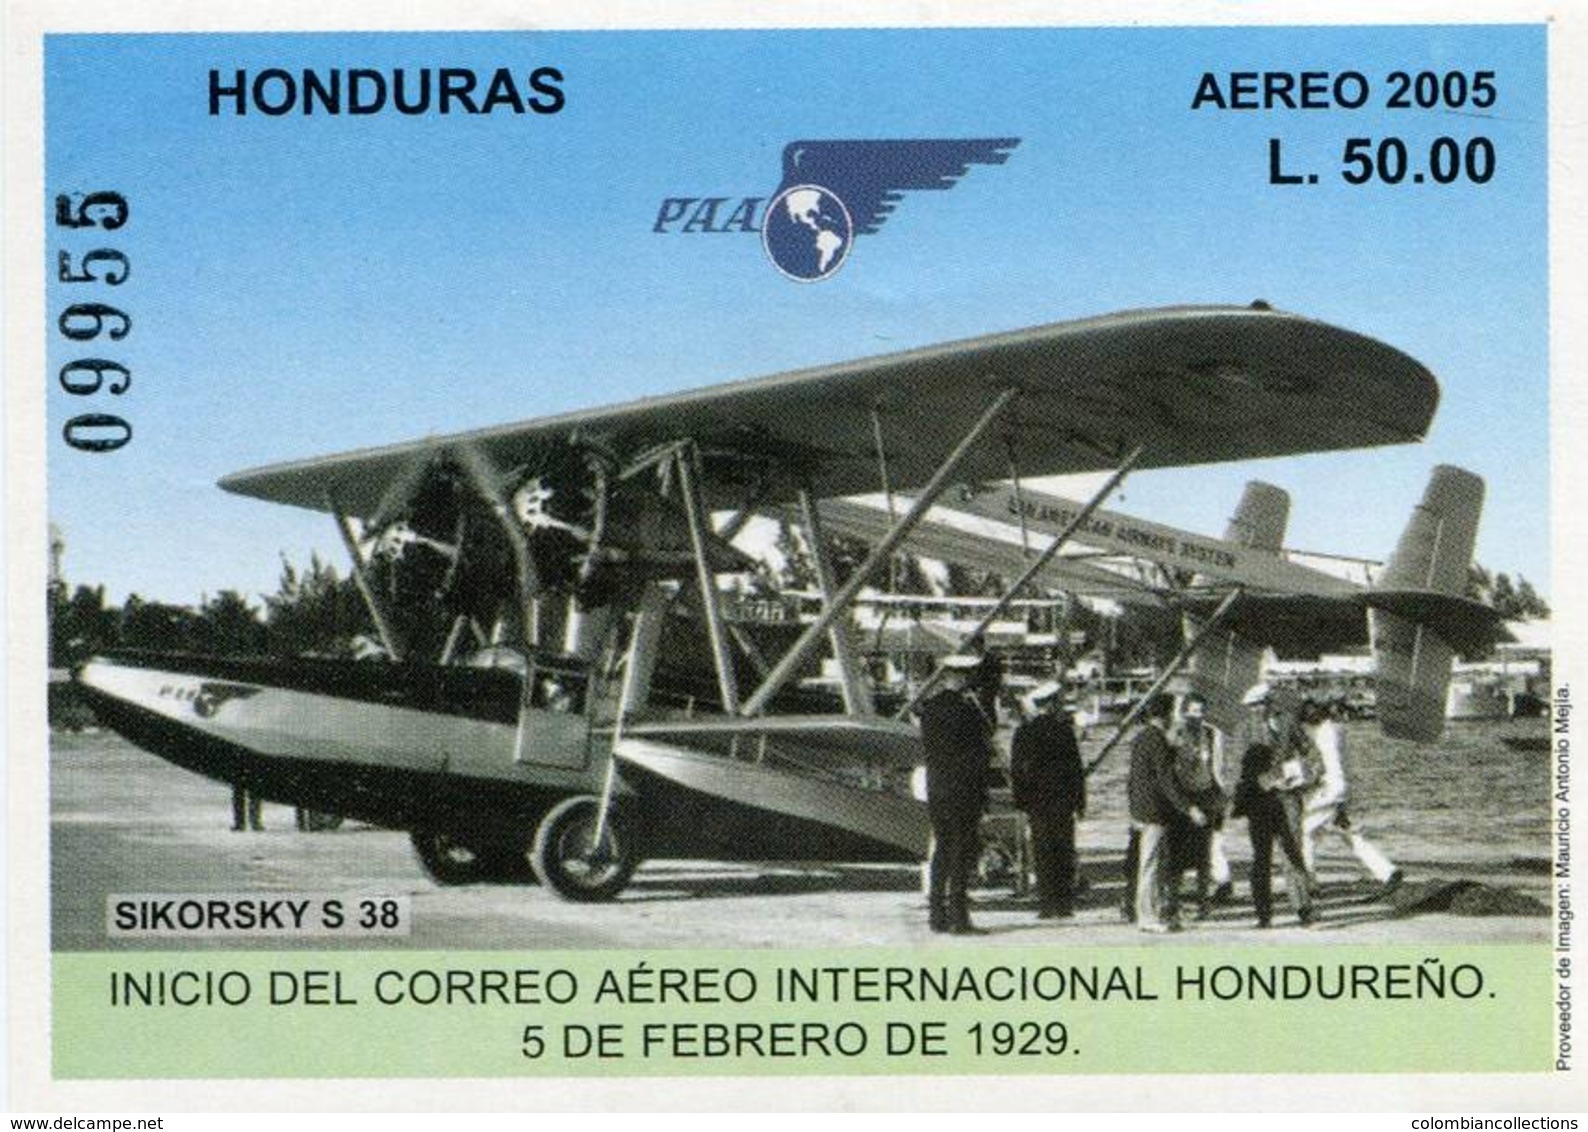 Lote H10, Honduras, 2005, HF, SS, Inicio Del Correo Aereo Internacional Hondureño, Airplane - Honduras